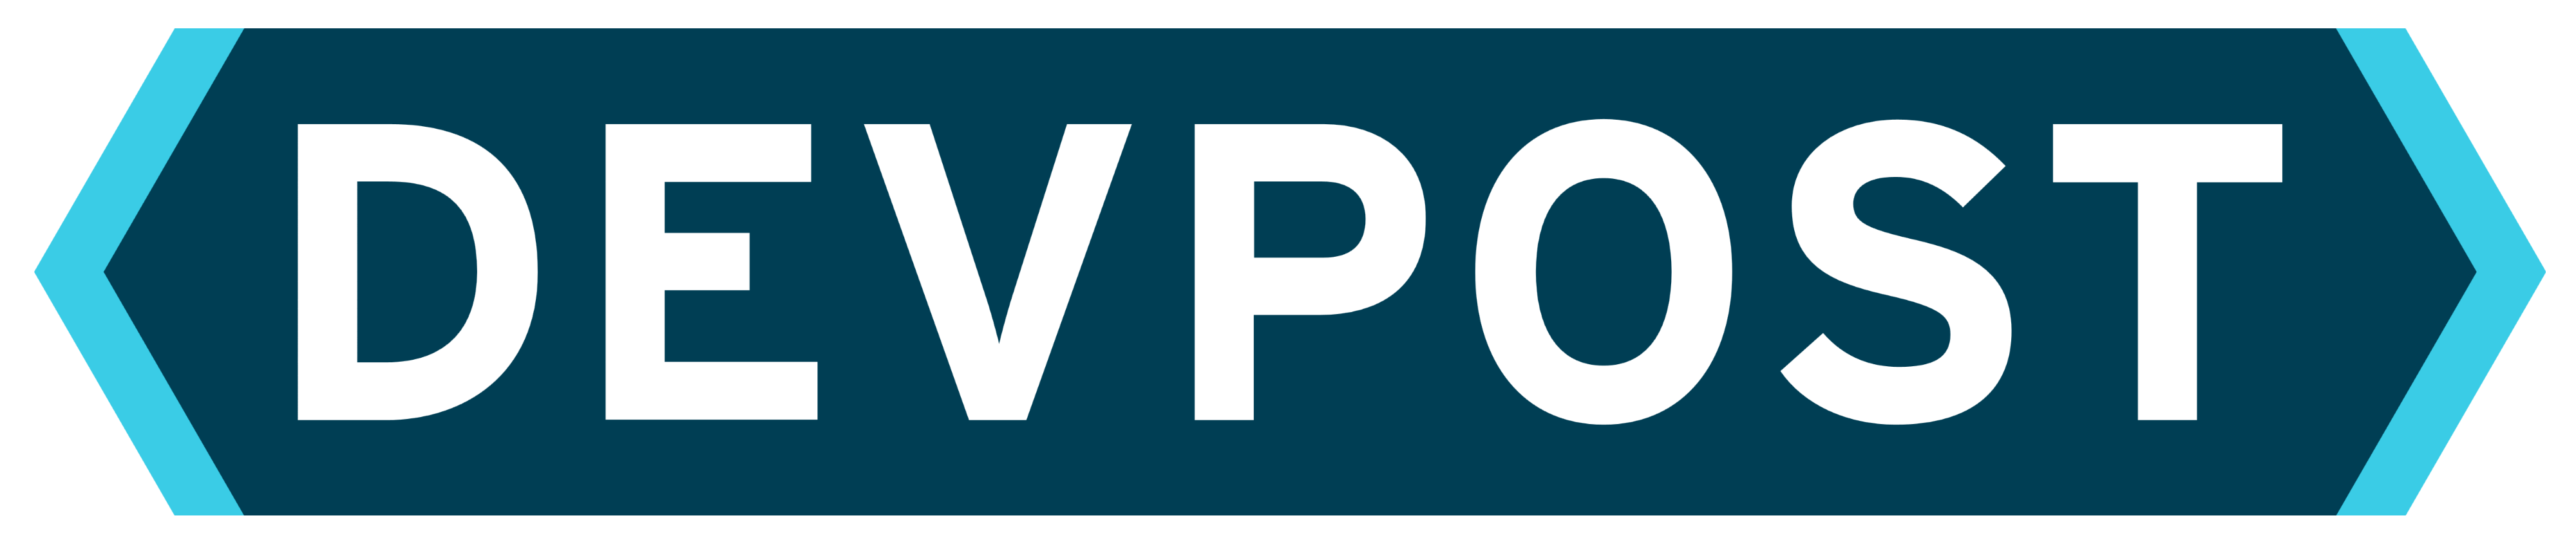 Devpost logo, logotype